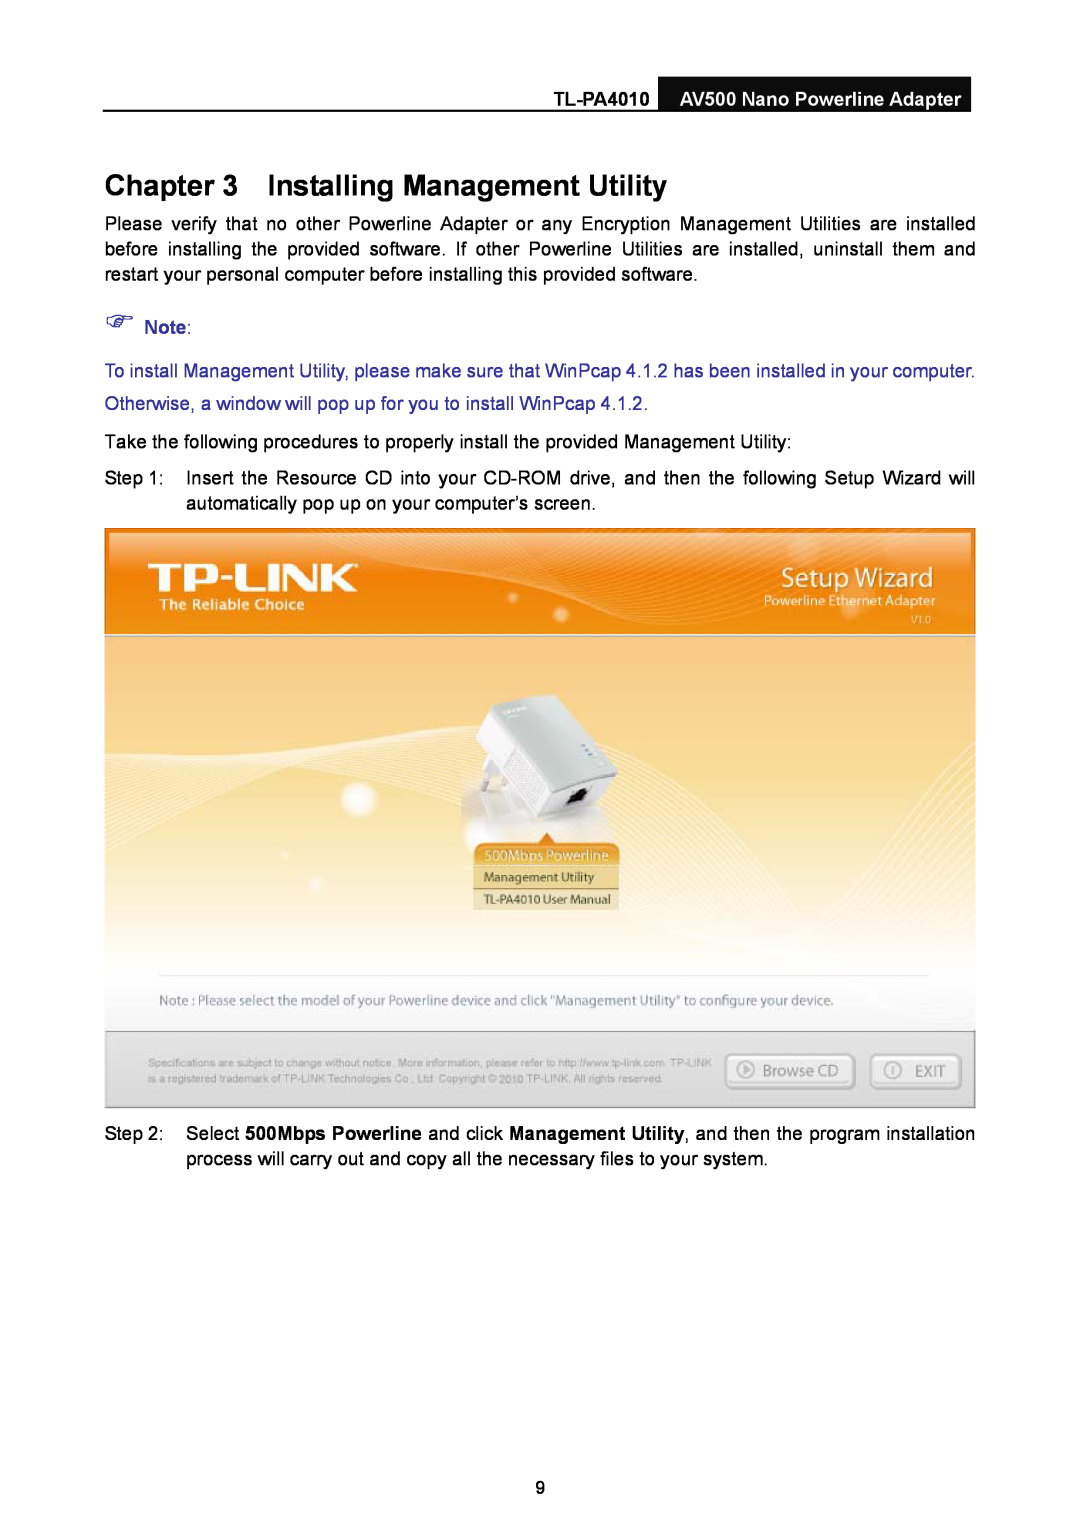 TP-Link manual Installing Management Utility, TL-PA4010 AV500 Nano Powerline Adapter,  Note 